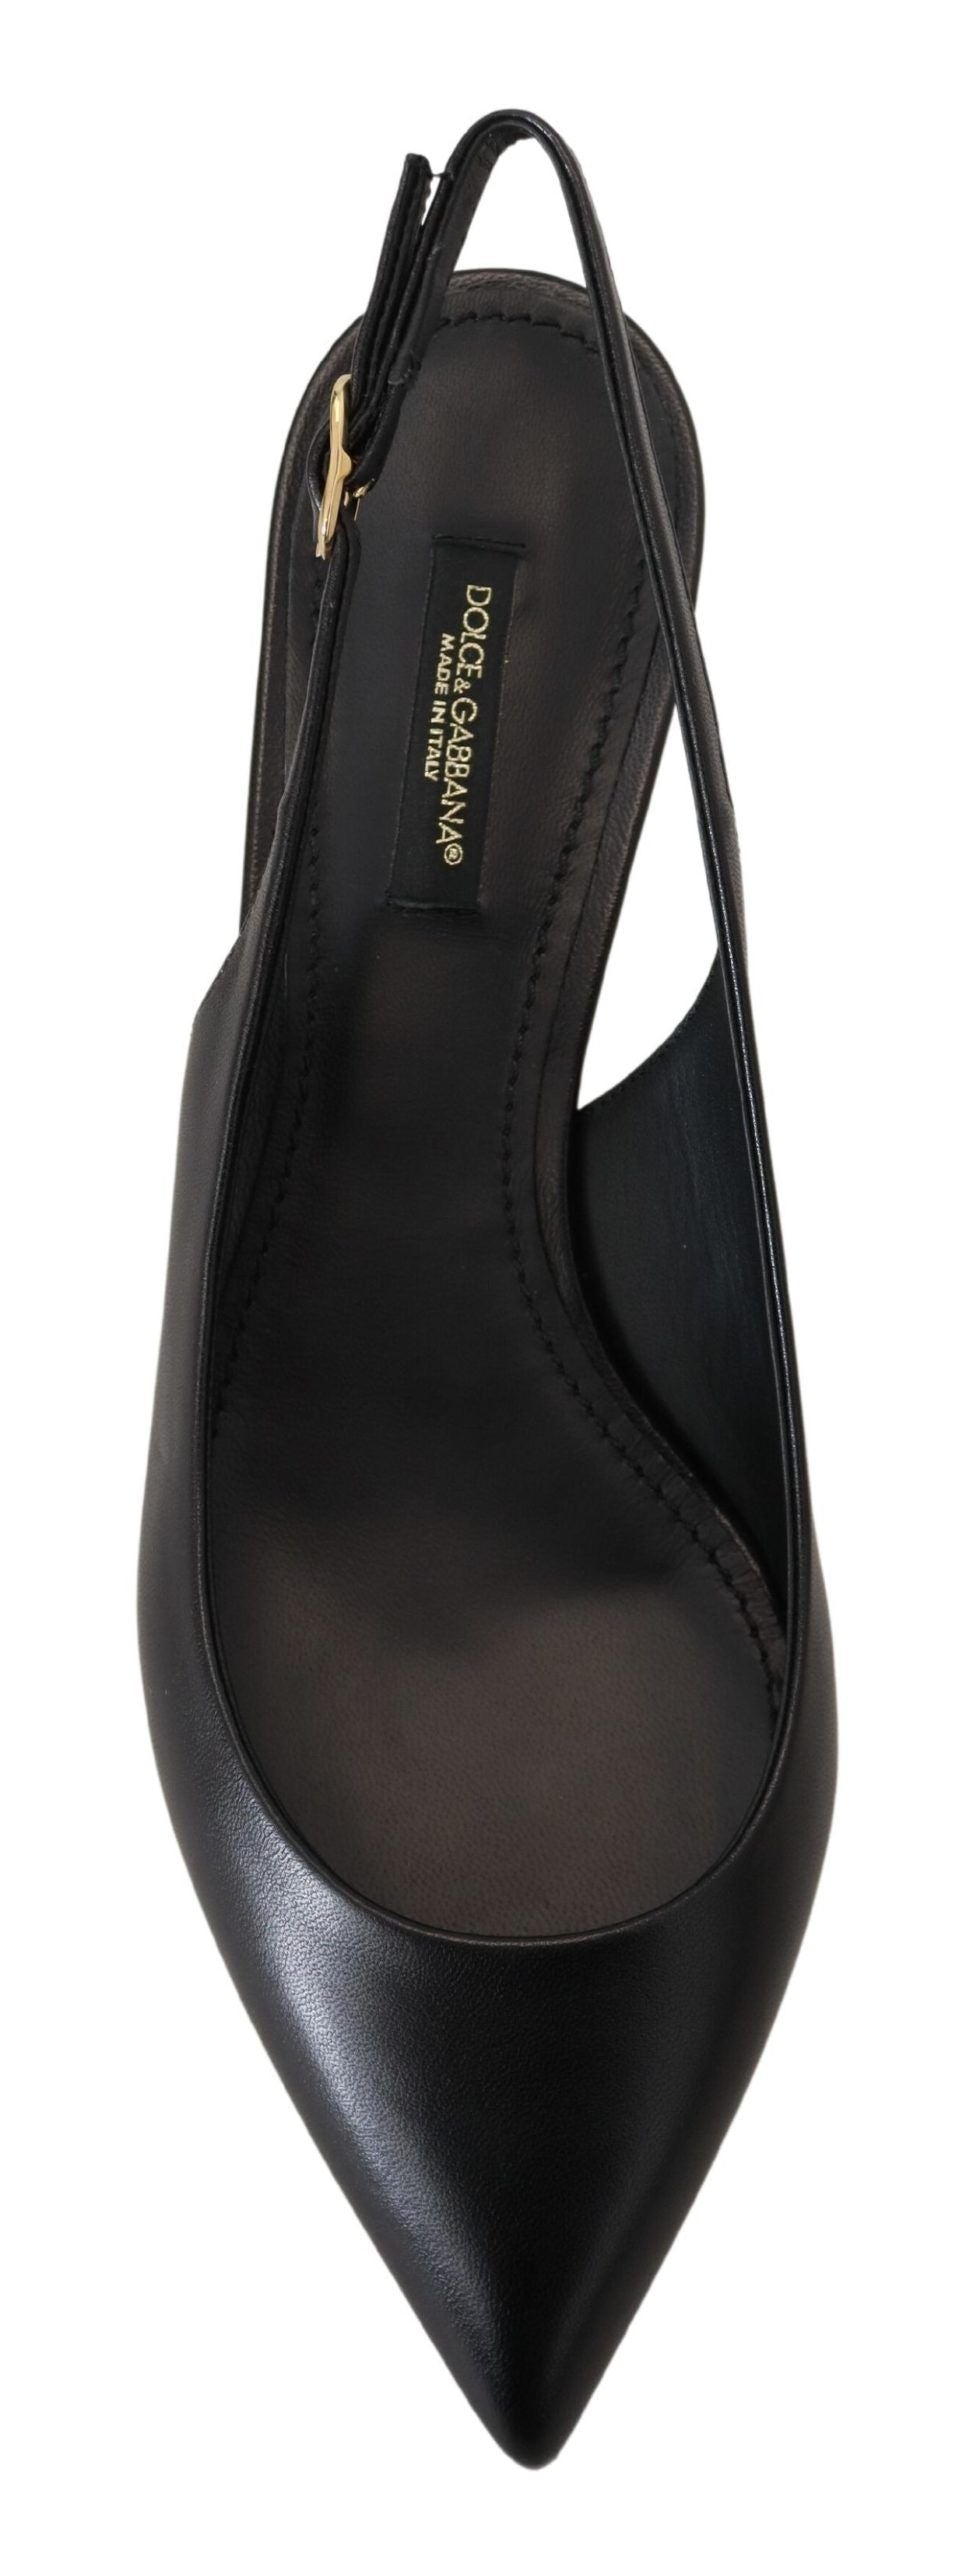 Fashionsarah.com Fashionsarah.com Dolce & Gabbana Black Leather Slingbacks Heels Pumps Shoes